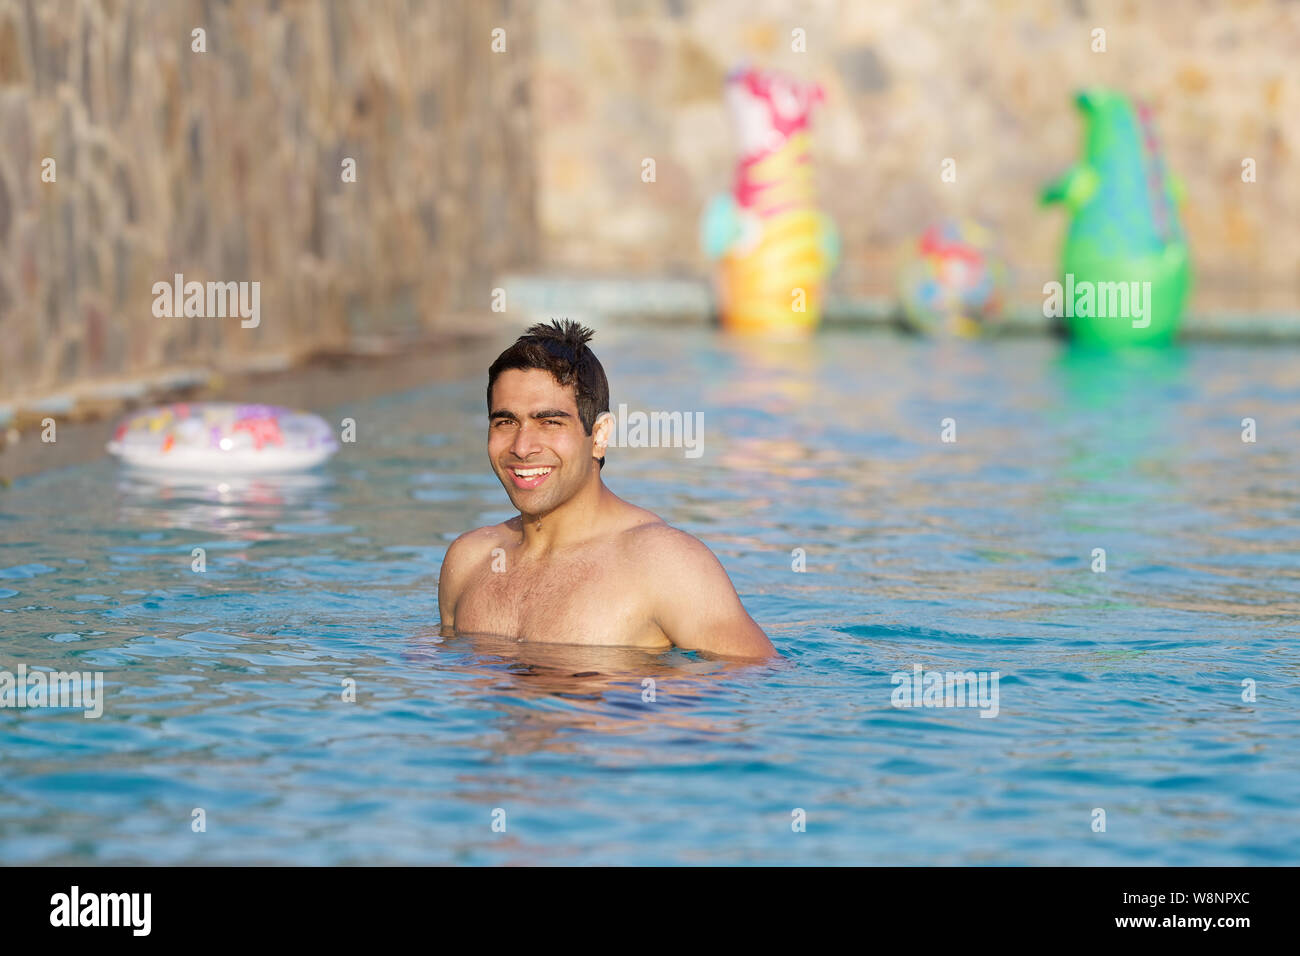 Young man enjoying in a swimming pool Stock Photo